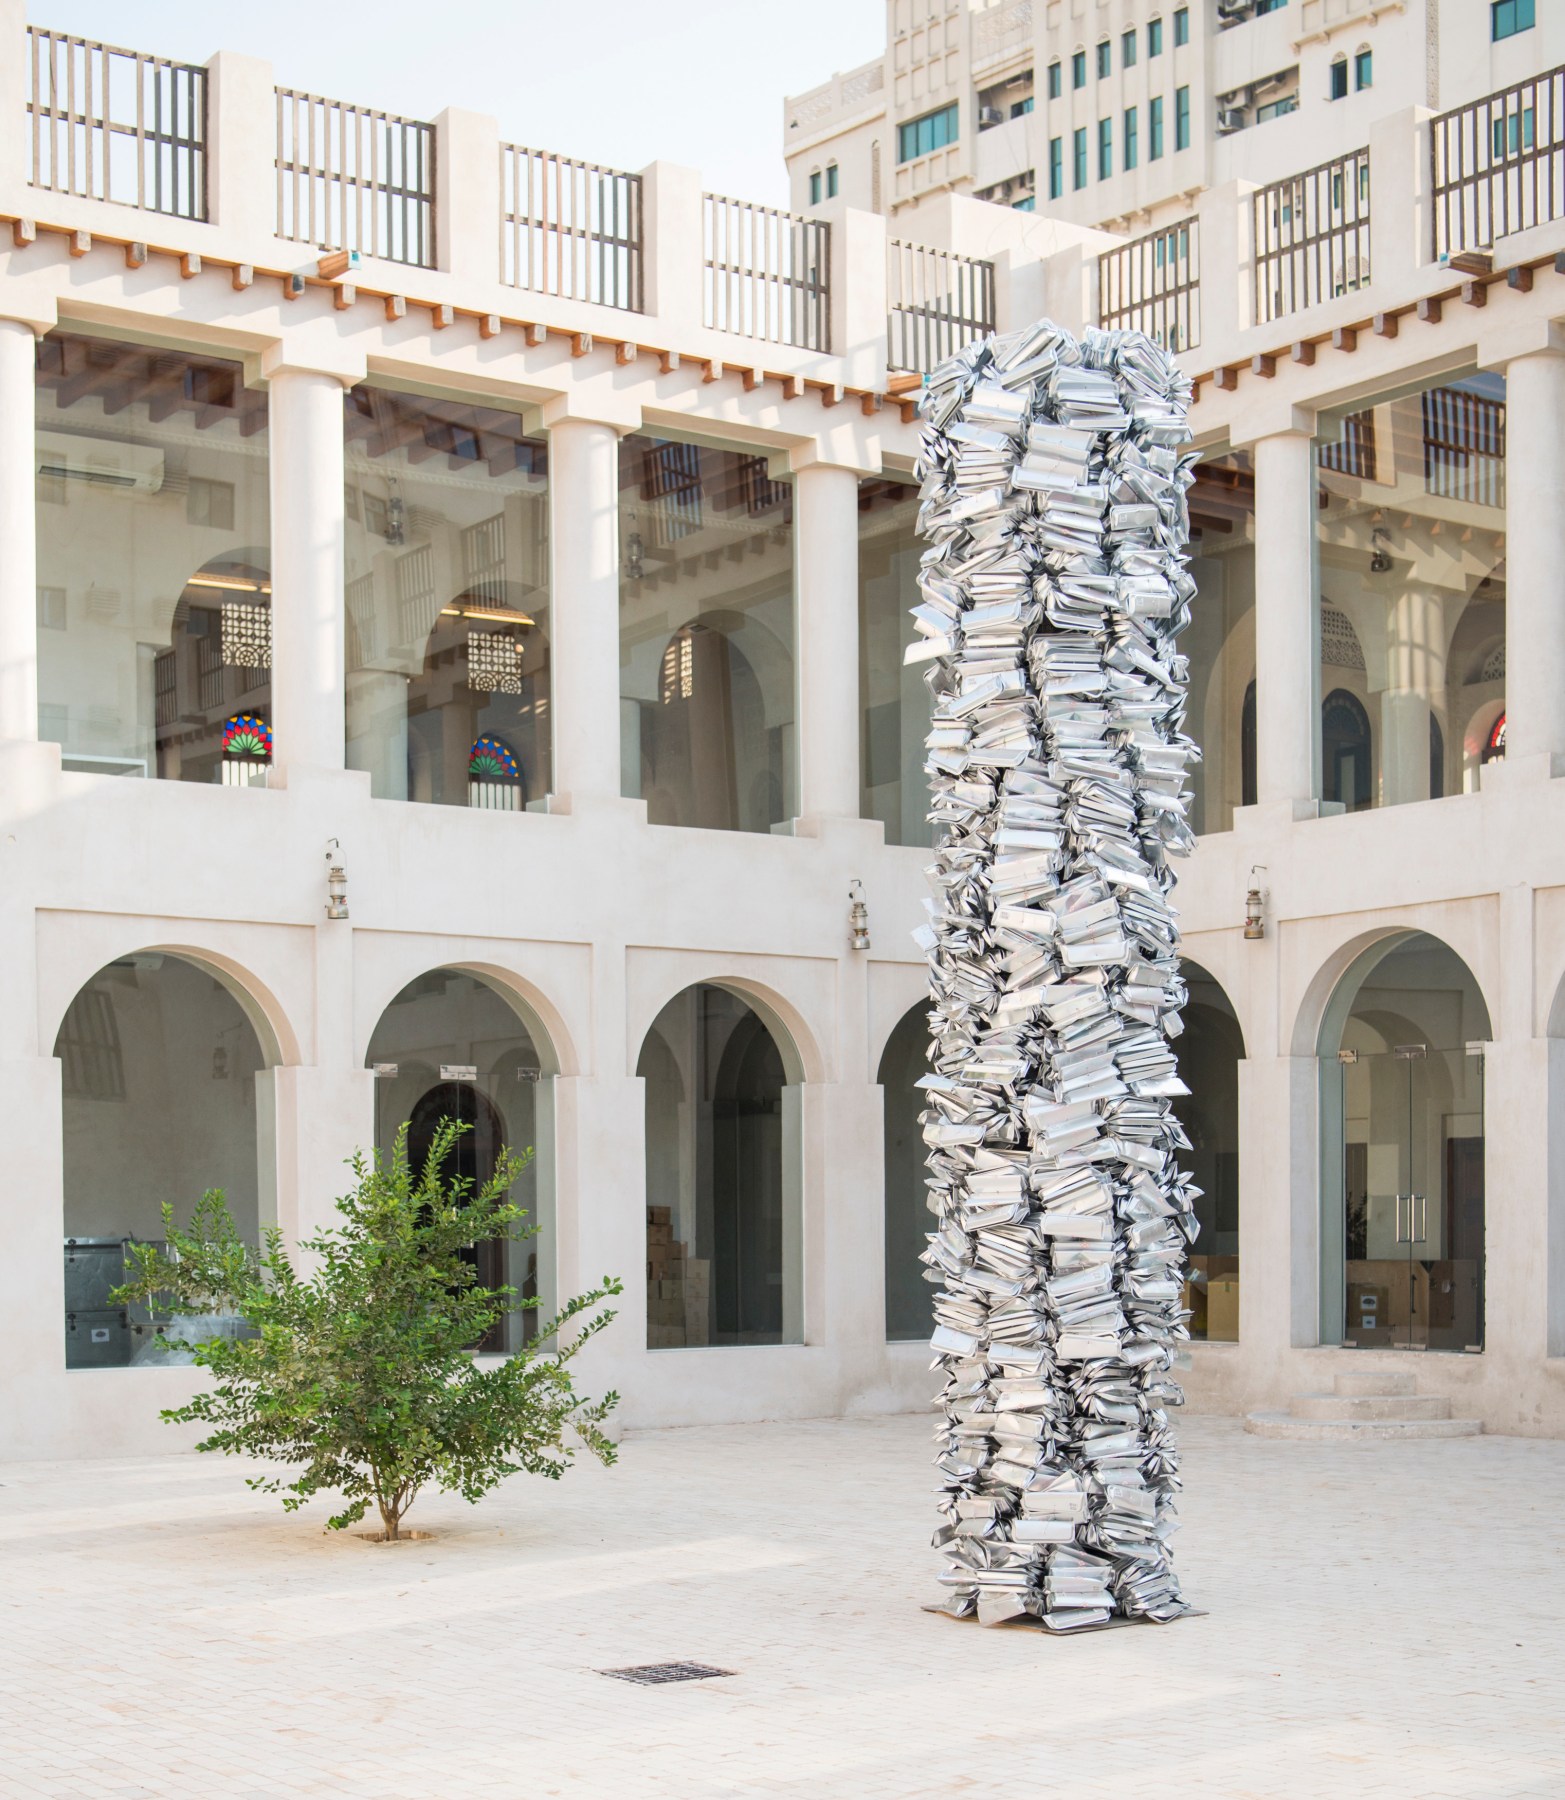 Hassan Sharif: I Am The Single Work Artist, installation view, Sharjah Art Foundation (2017)